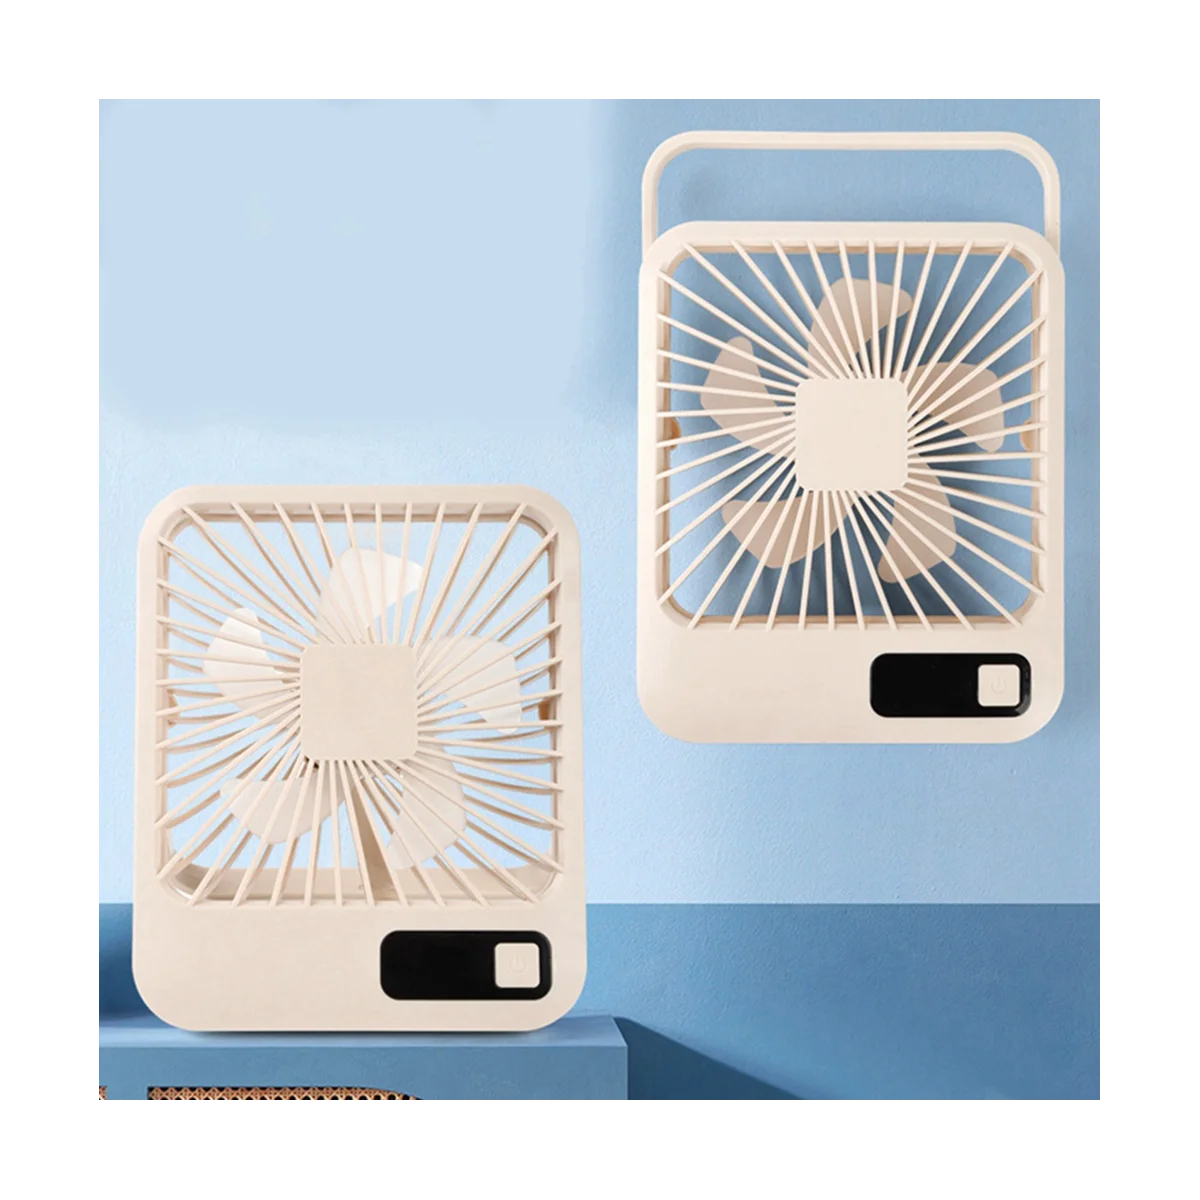 

Digital Desktop Convenient Home Student Dormitory Office Mute Portable Multifunctional Charging Mini Fan, White